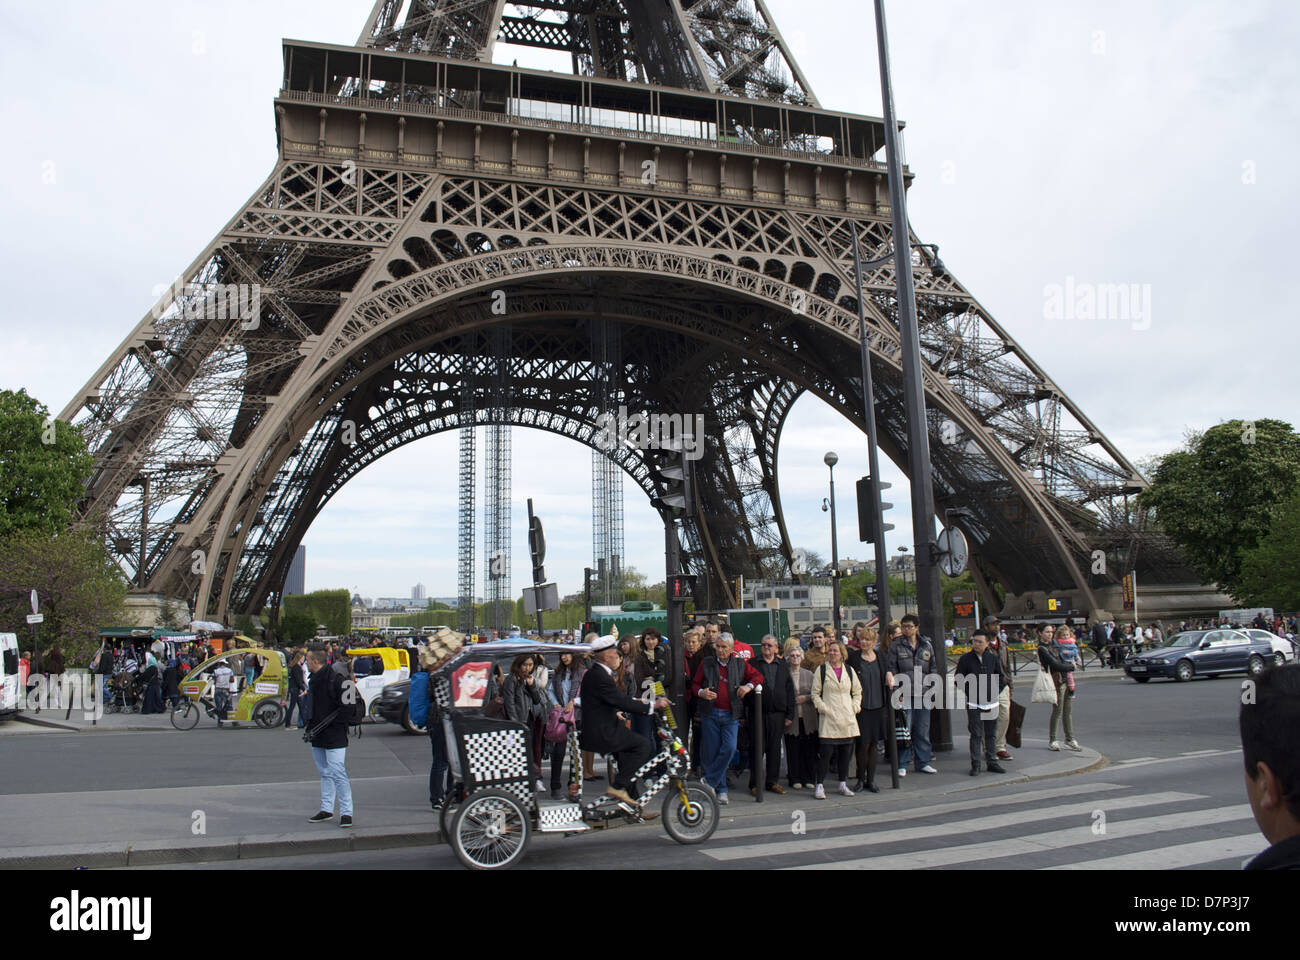 Eiffel Tower street view Stock Photo